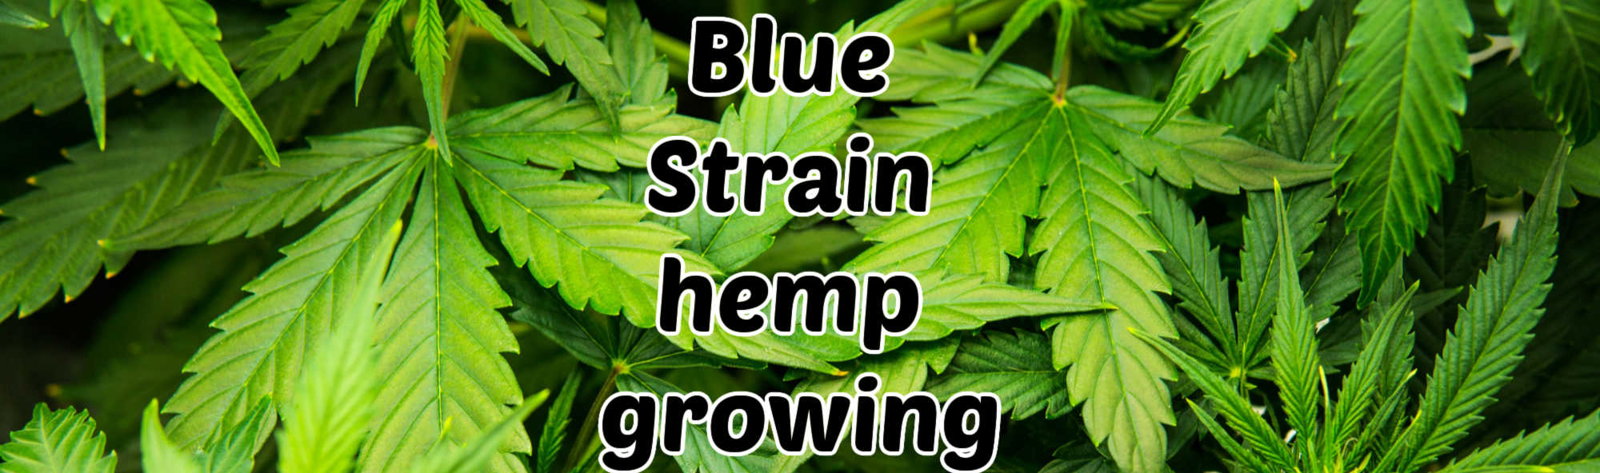 image of blue strain hemp growing